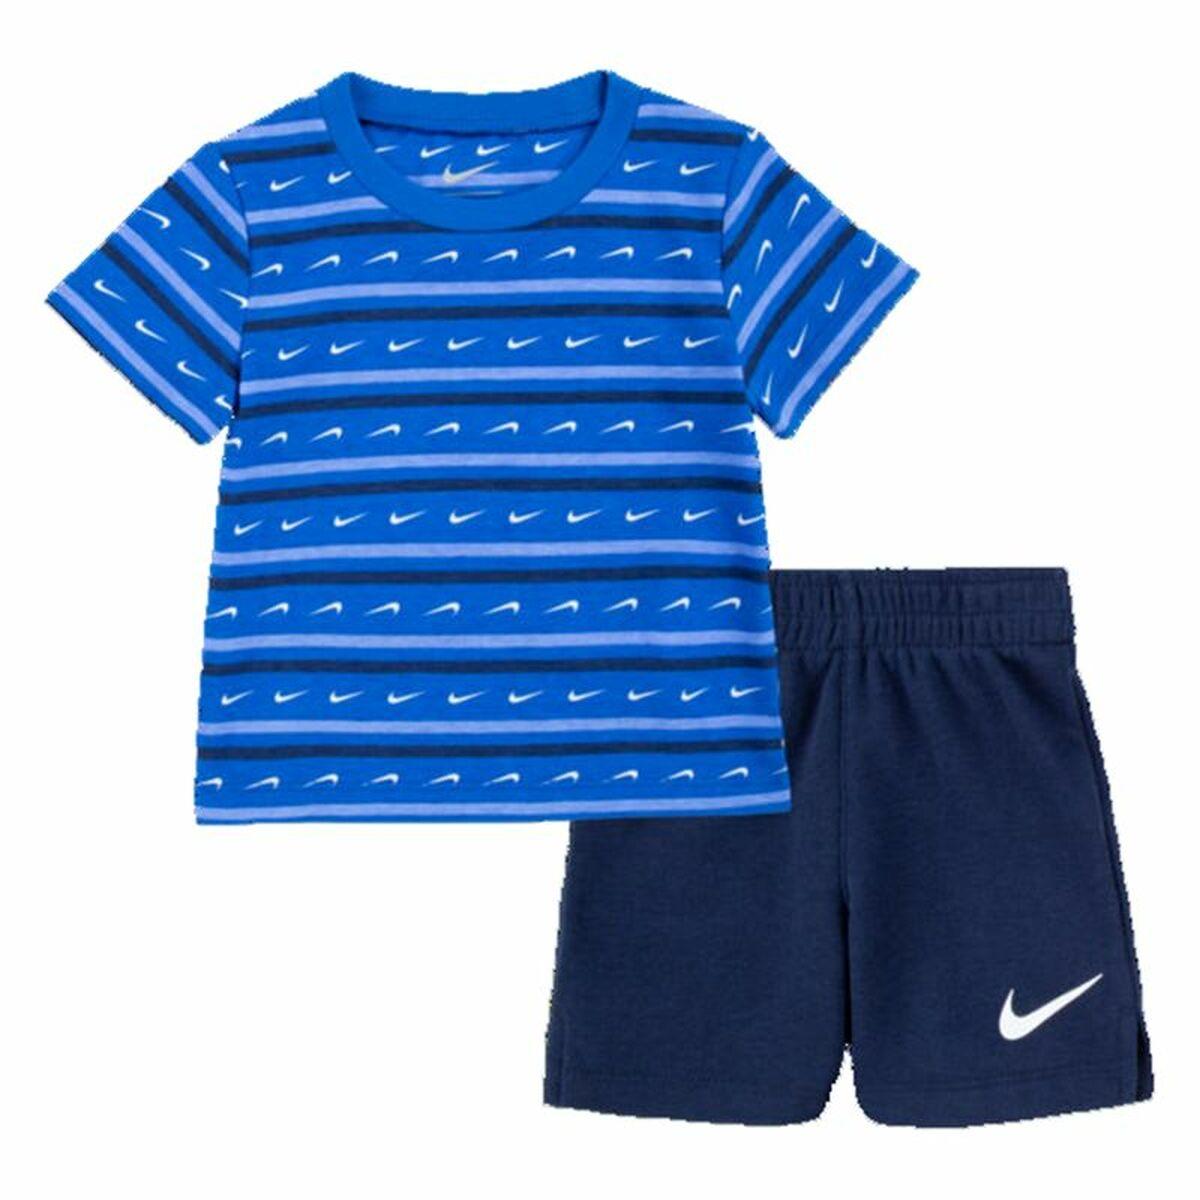 Sportstøj til Baby Nike Swoosh Stripe Blå 18 måneder